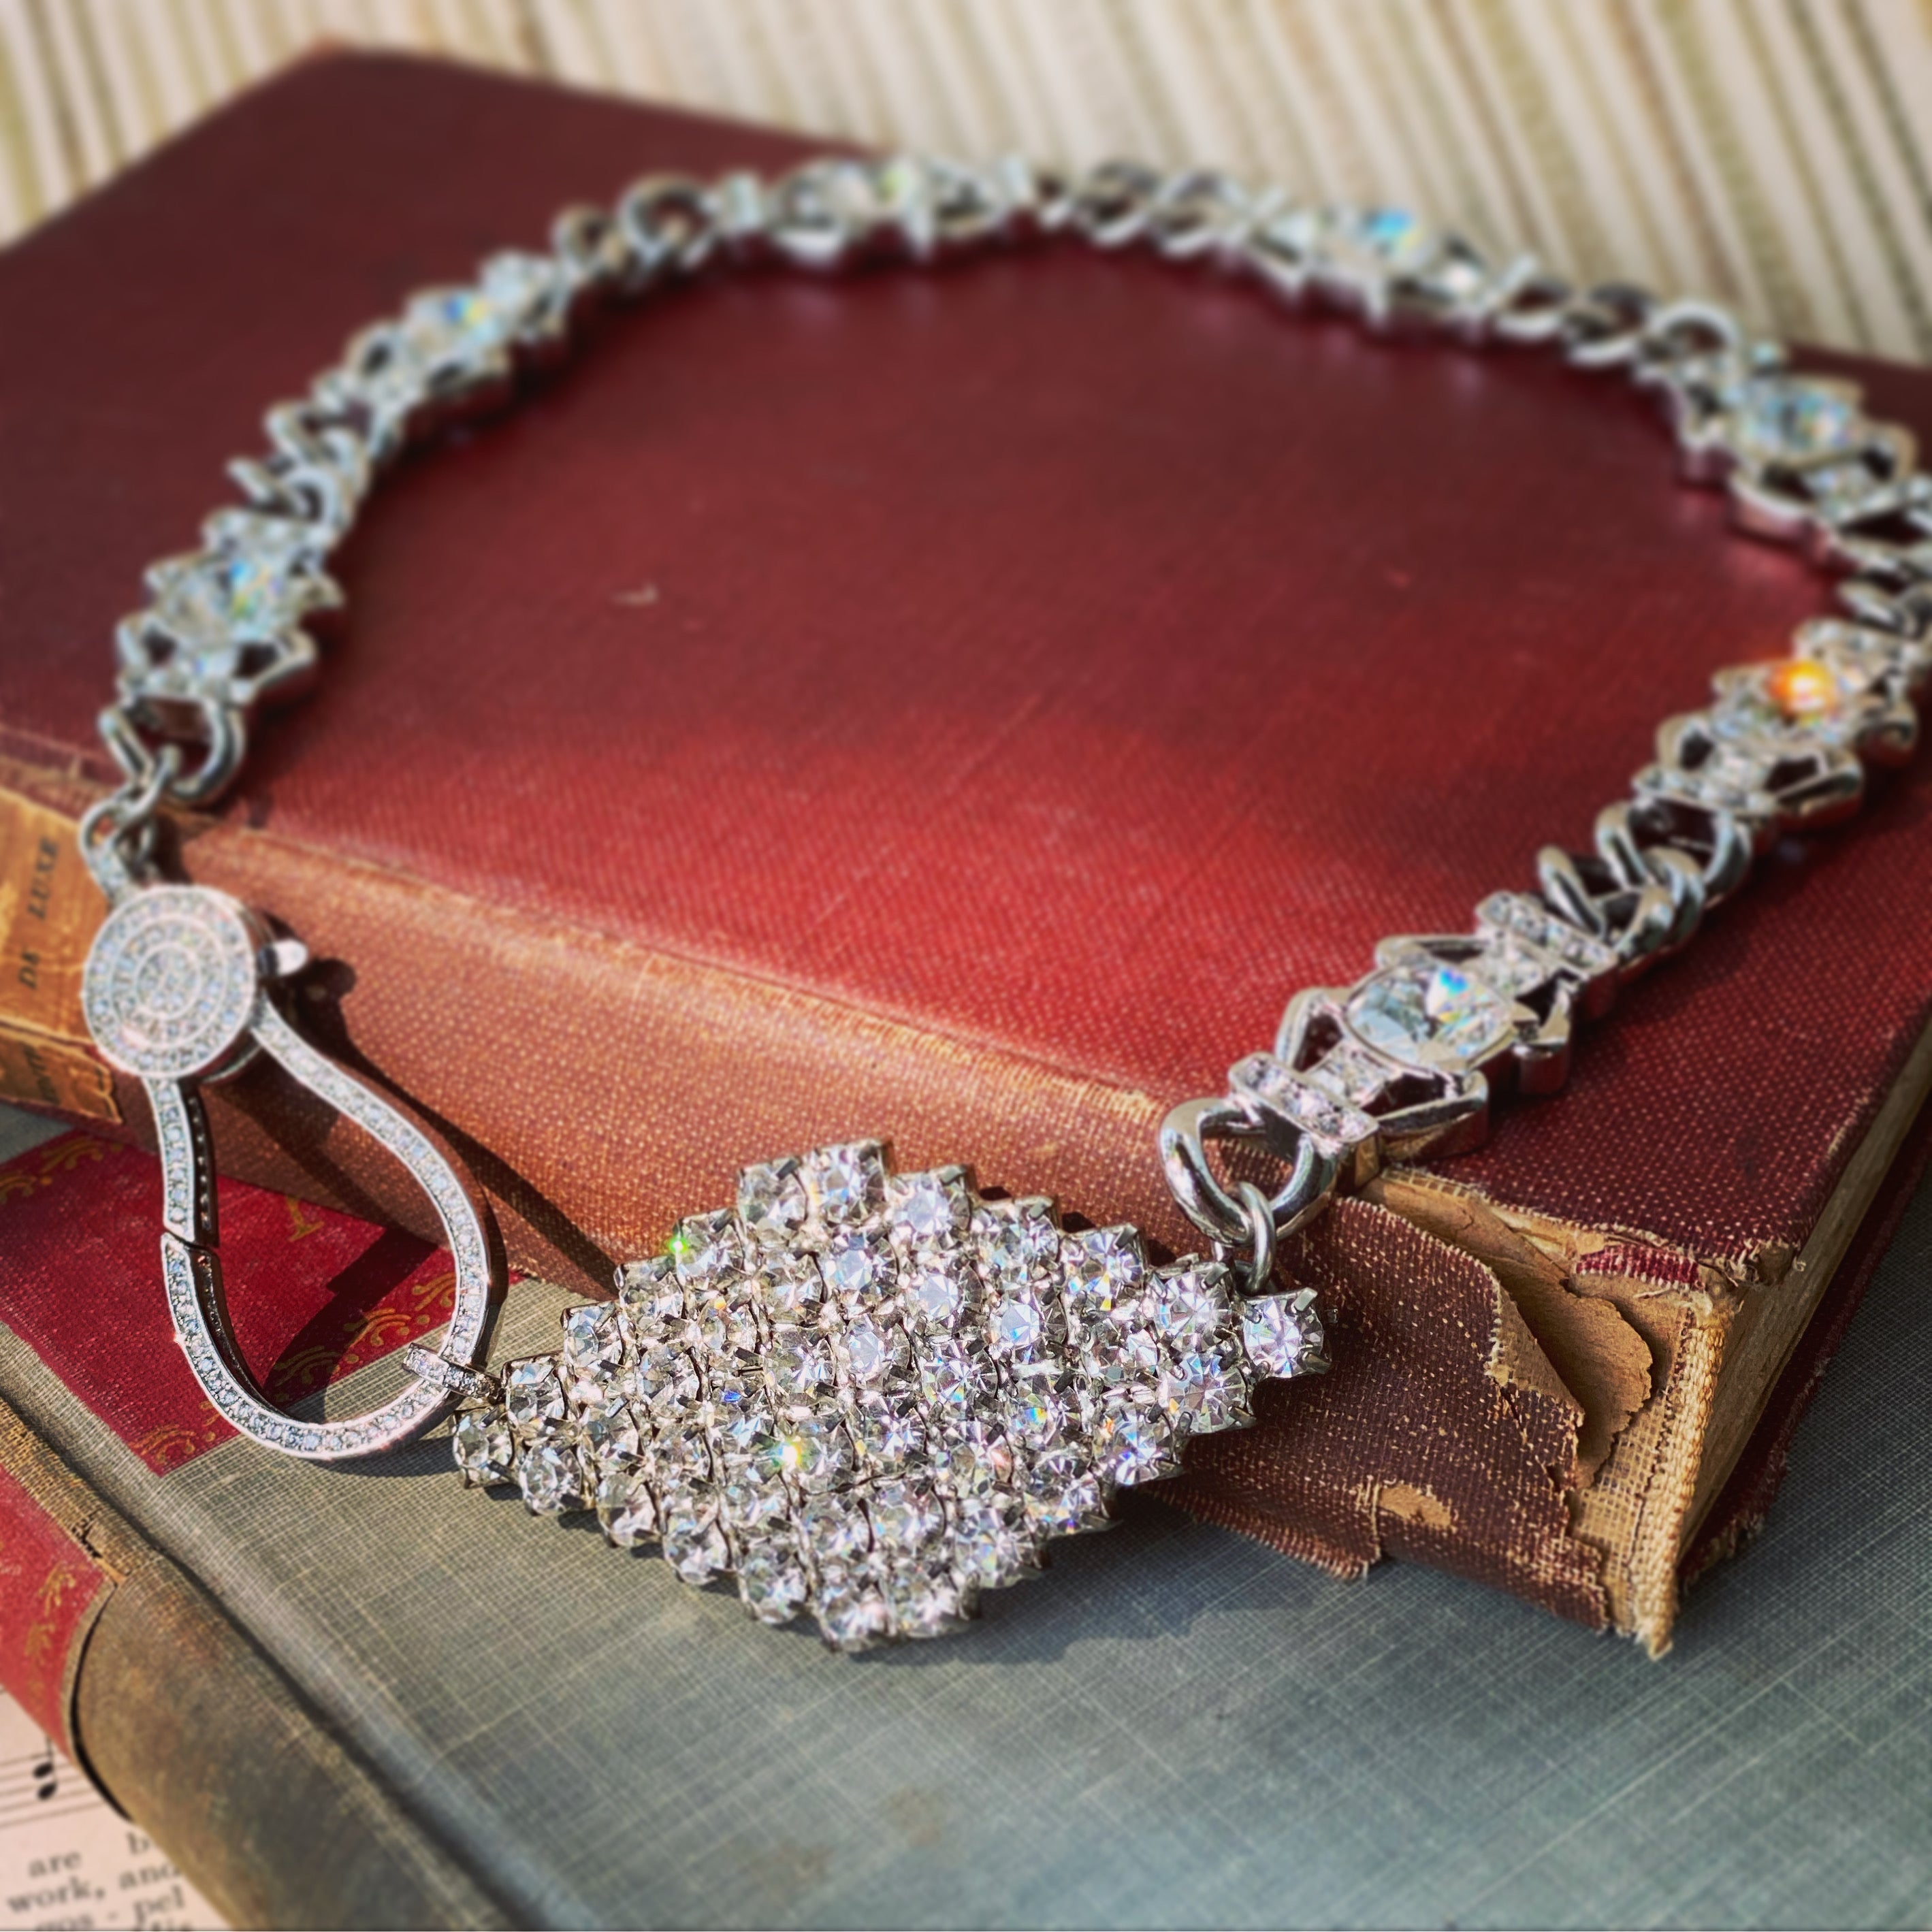 Ghiaccio rhinestone link necklace